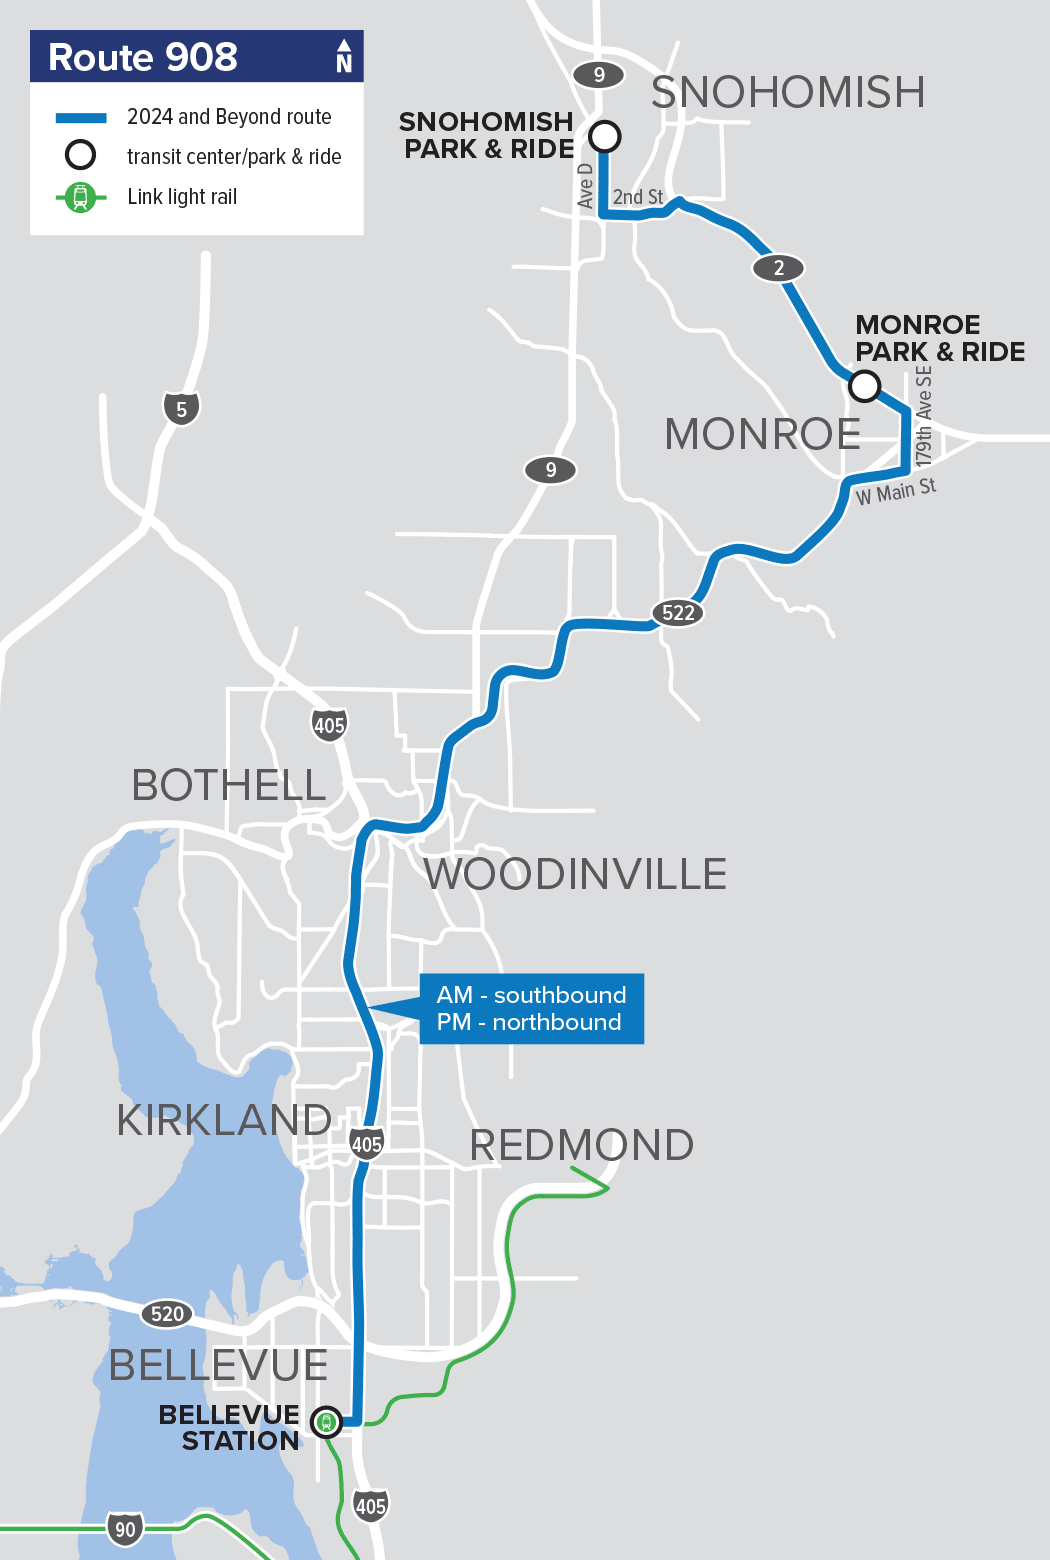 Route 908 – Snohomish – Bellevue (new route)